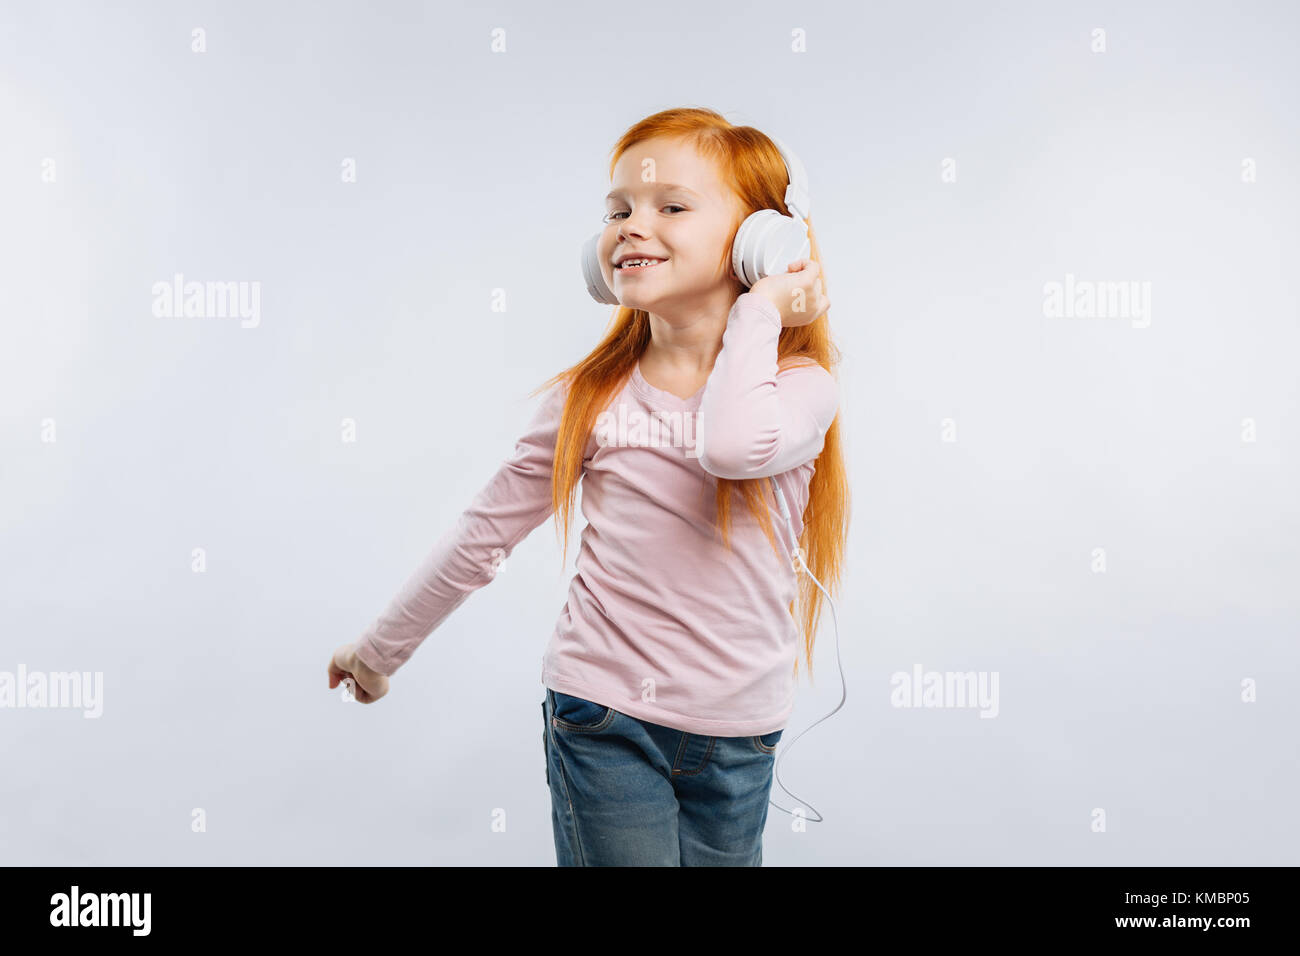 Funny child touching her headphones Stock Photo